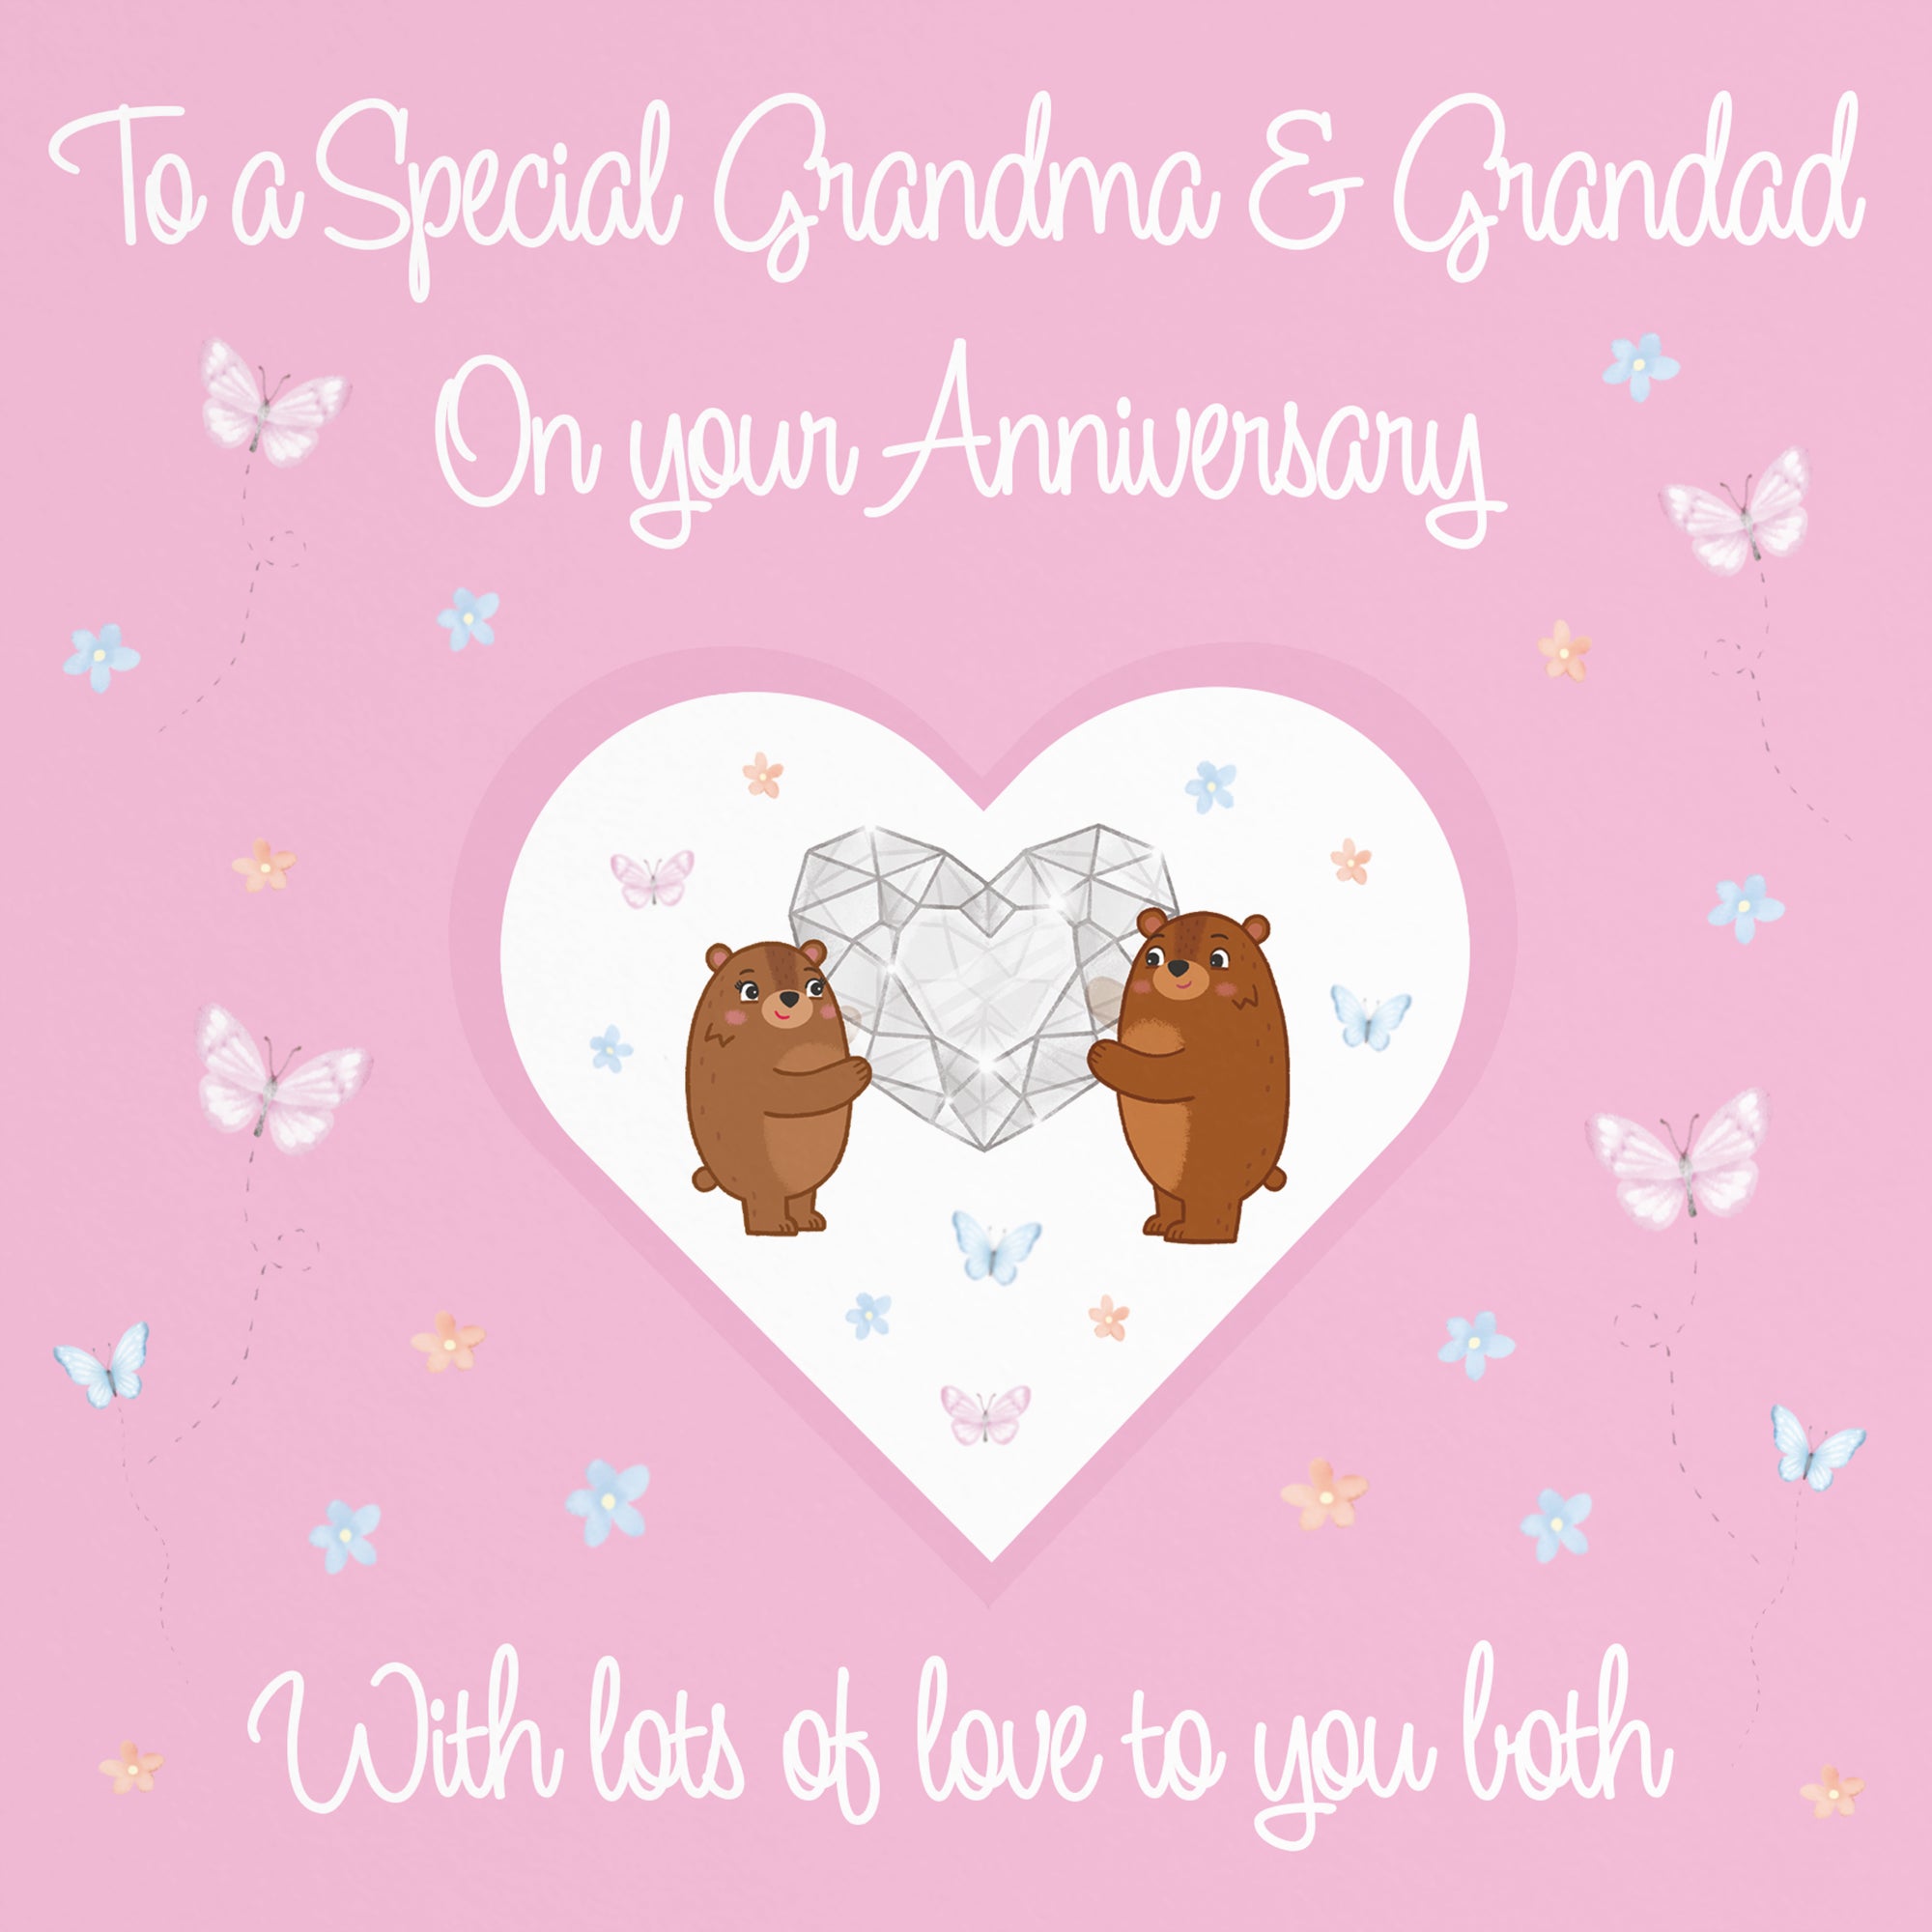 Grandma And Grandad Anniversary Card Romantic Meadows